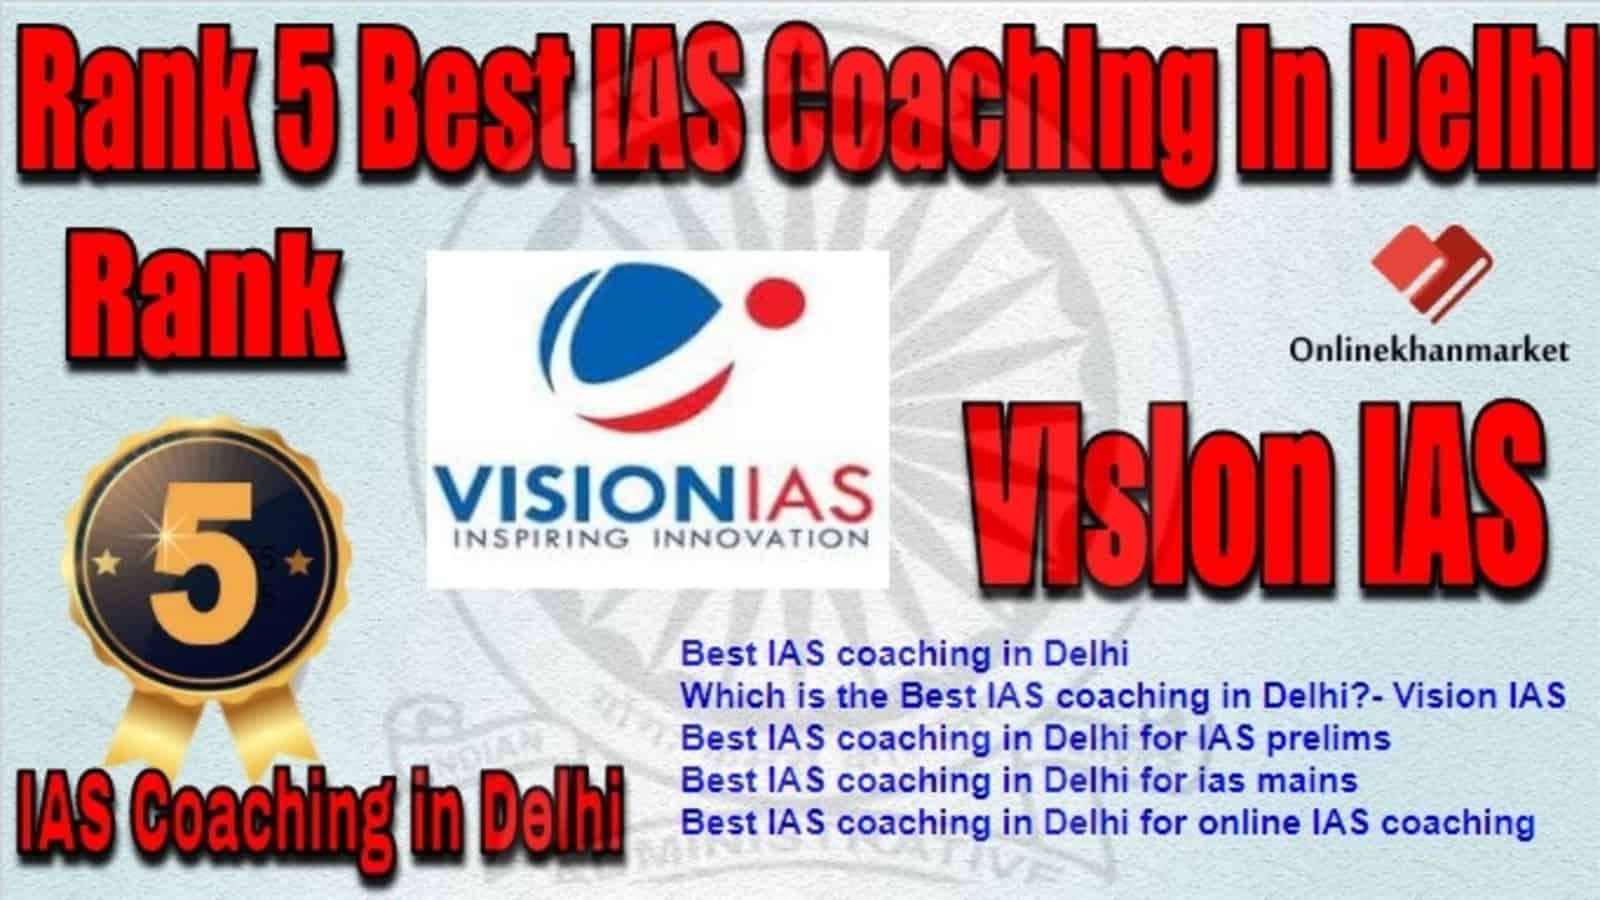 Rank 5 Best IAS Coaching in Delhi